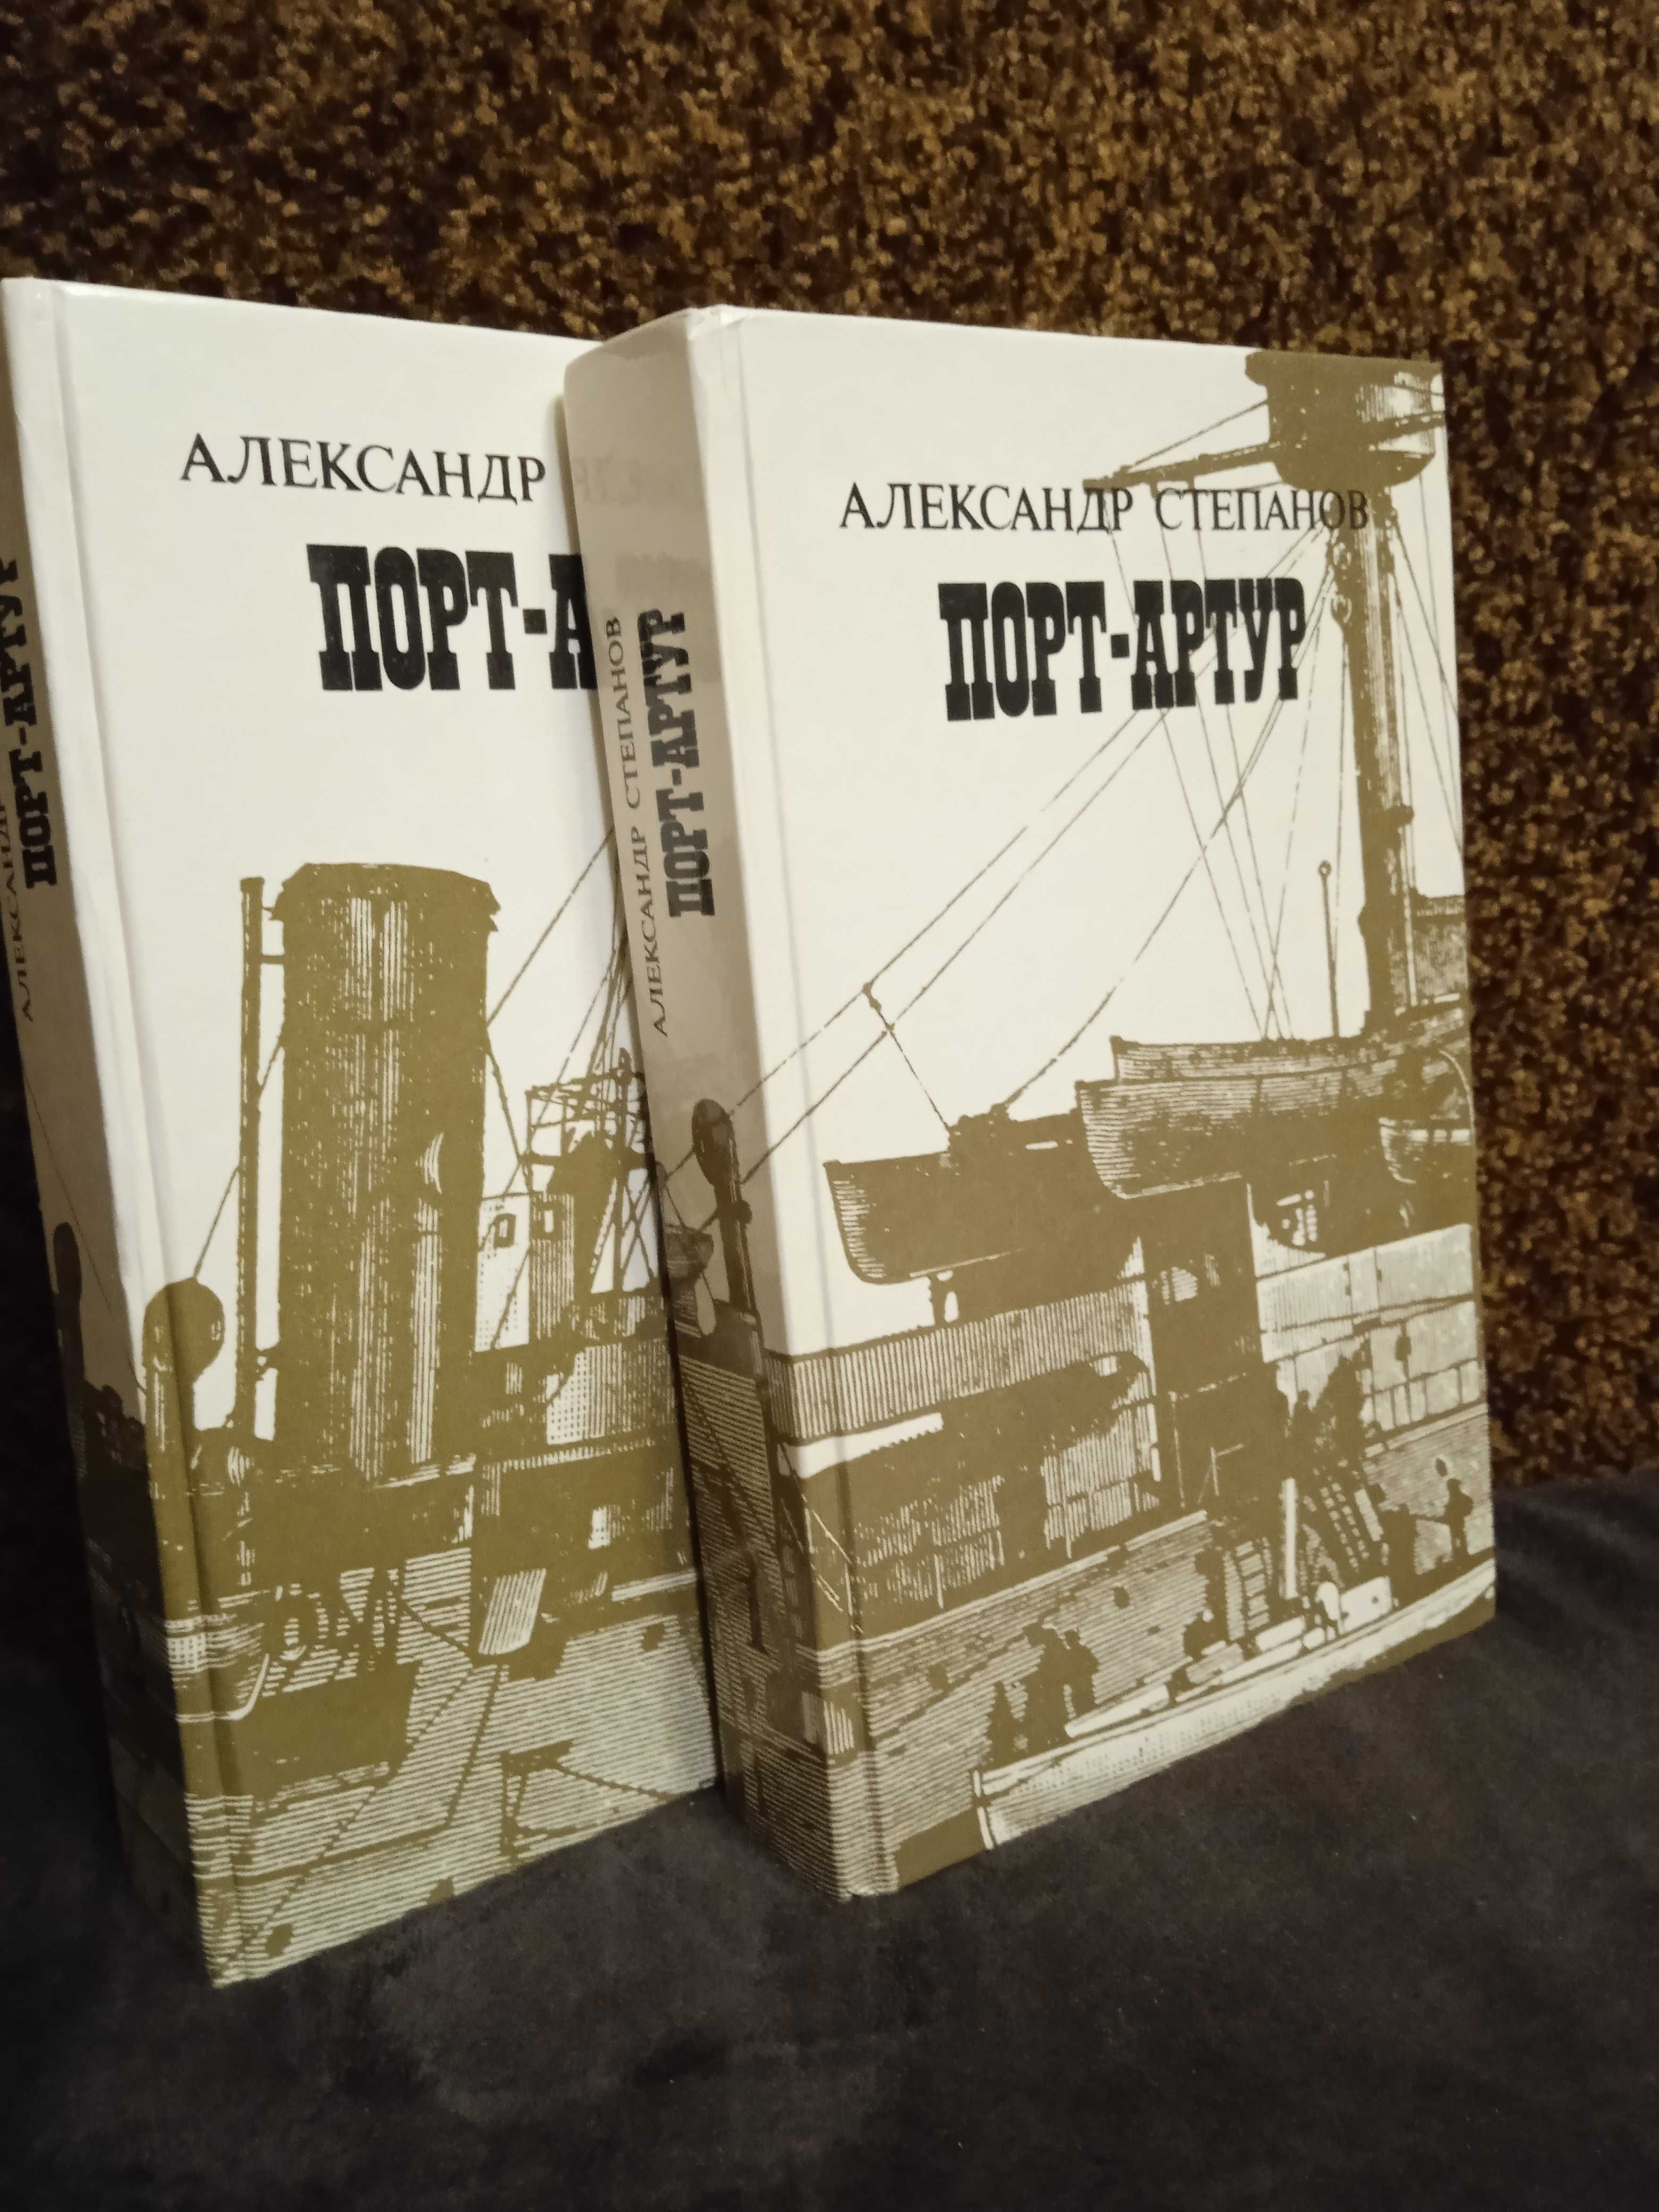 А.Степанов " Порт -Артур" в 2 томах